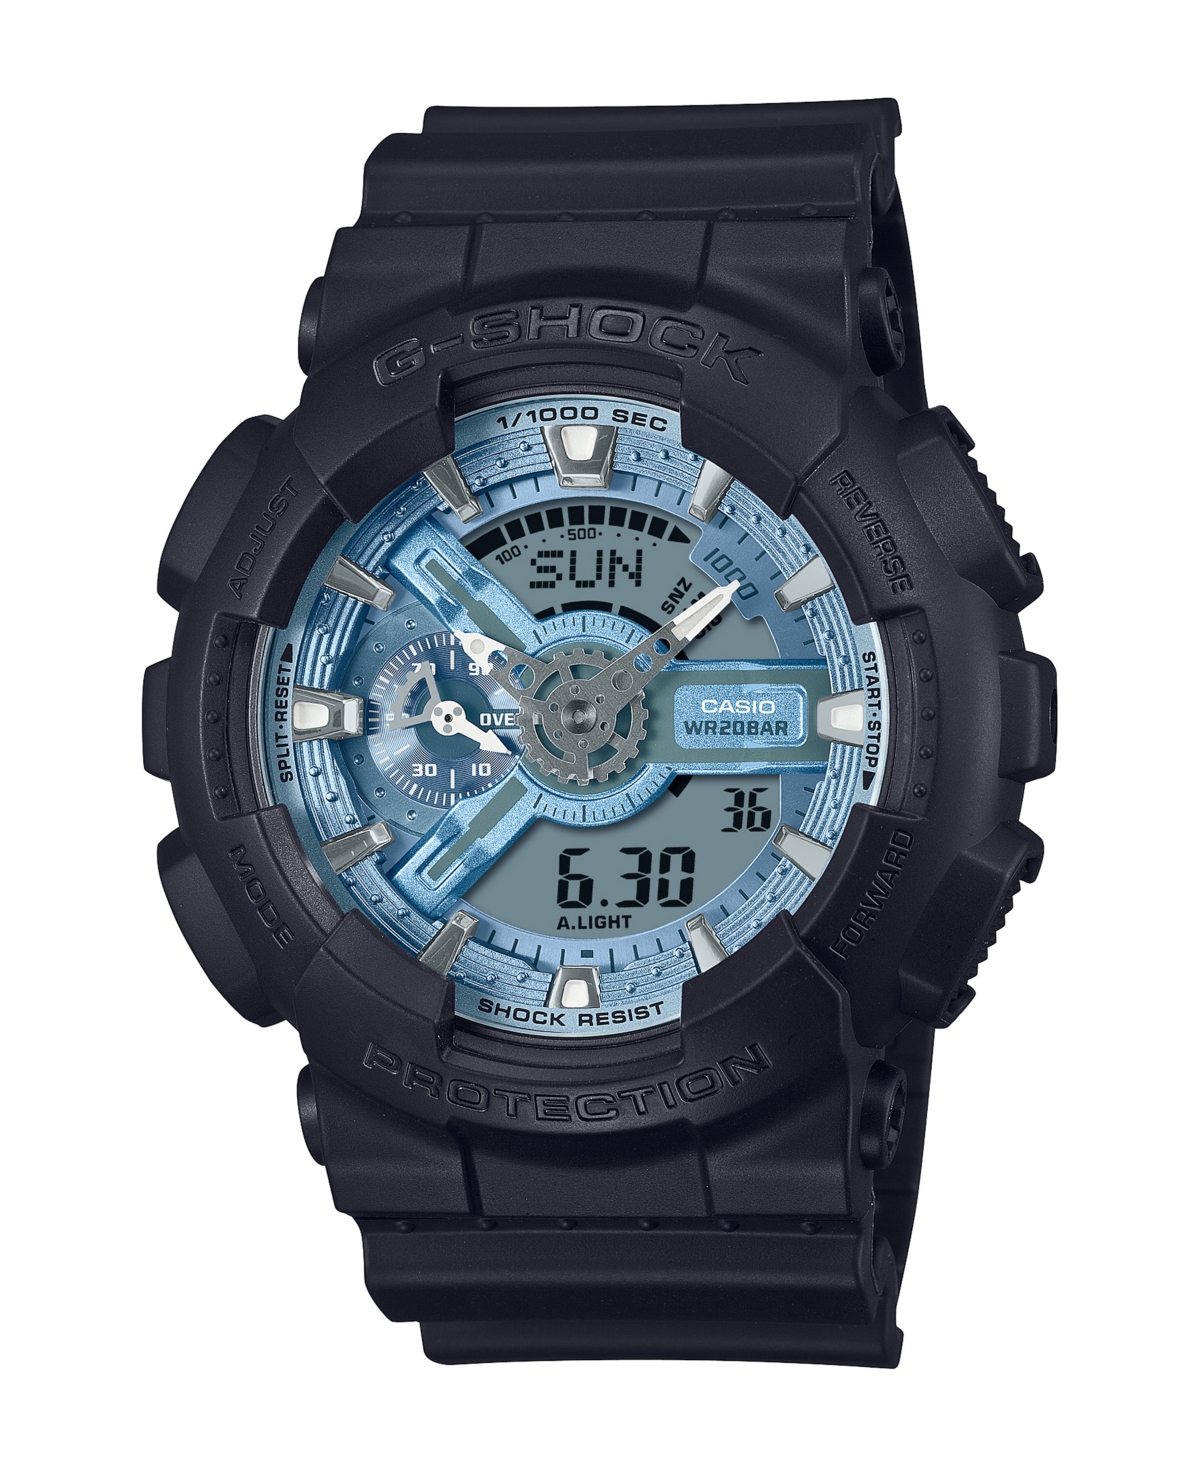 G-shock Men's Analog Digital Black Resin Watch, 51.2mm, Ga110cd-1a2